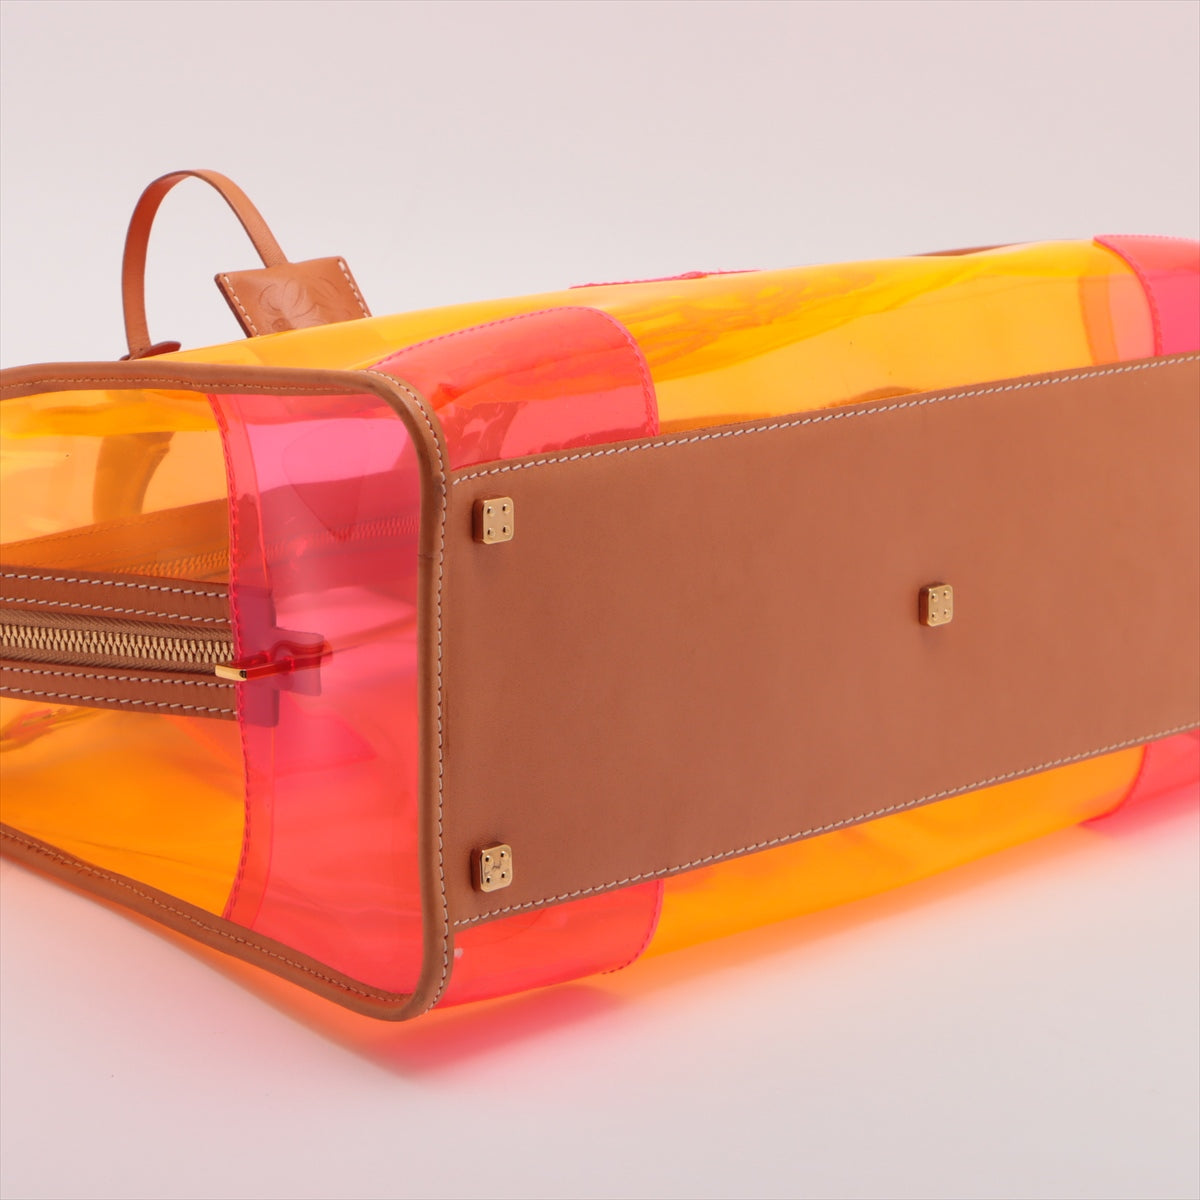 Loewe 亞馬遜乙烯基 X 皮革手提包橙色行李箱